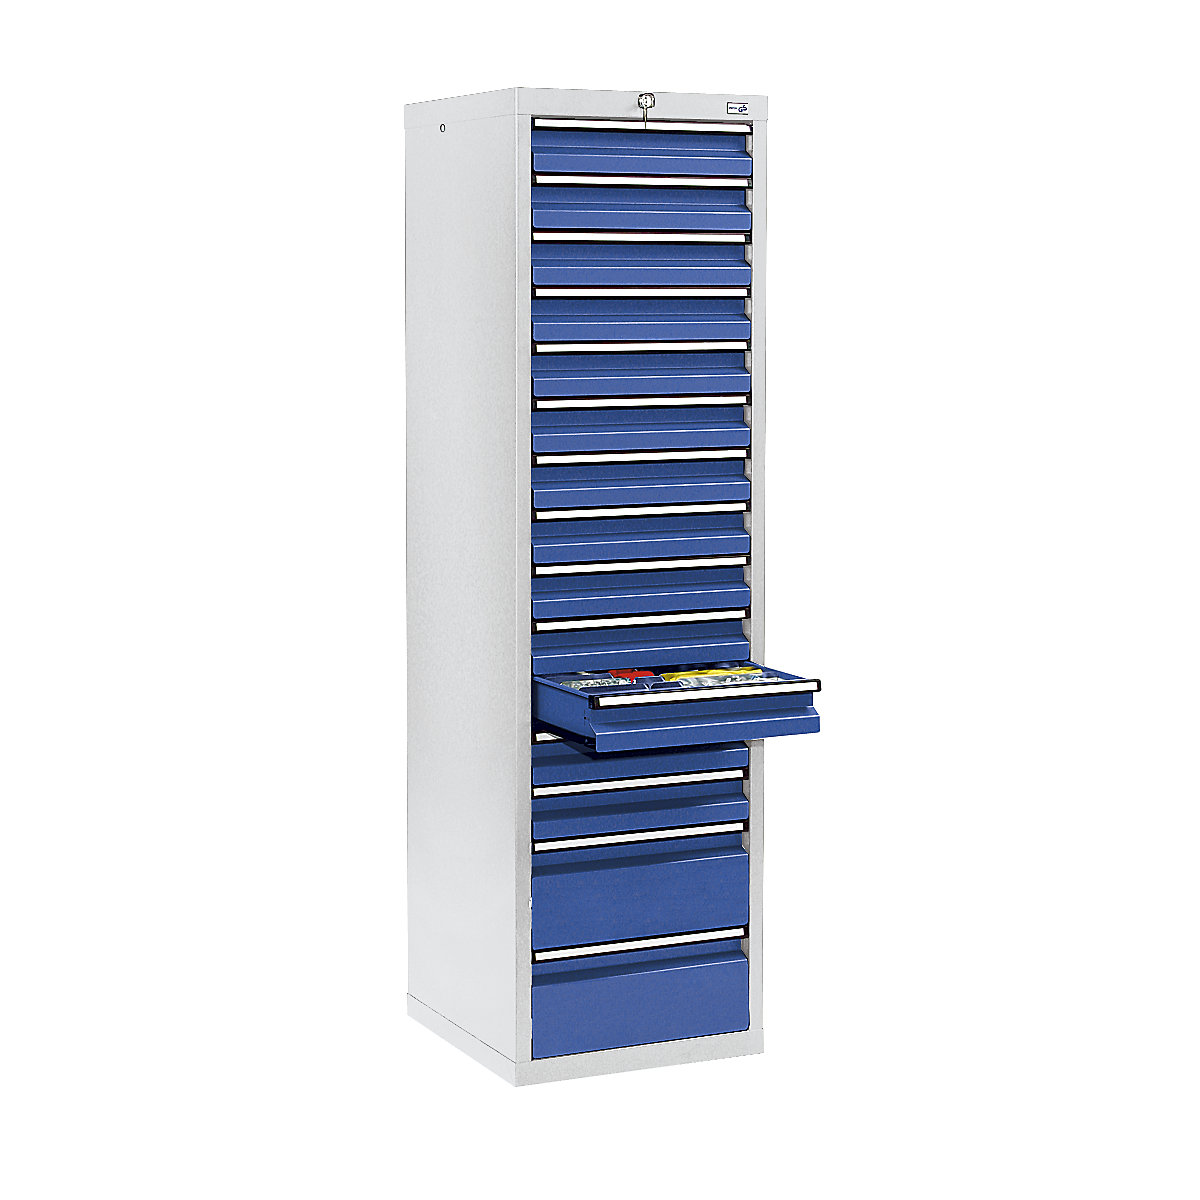 Armoire à tiroirs, h x l x p 1800 x 500 x 500 mm, 13 tiroirs hauteur 100 mm, 2 hauteur 200 mm, corps gris, tiroirs bleu gentiane